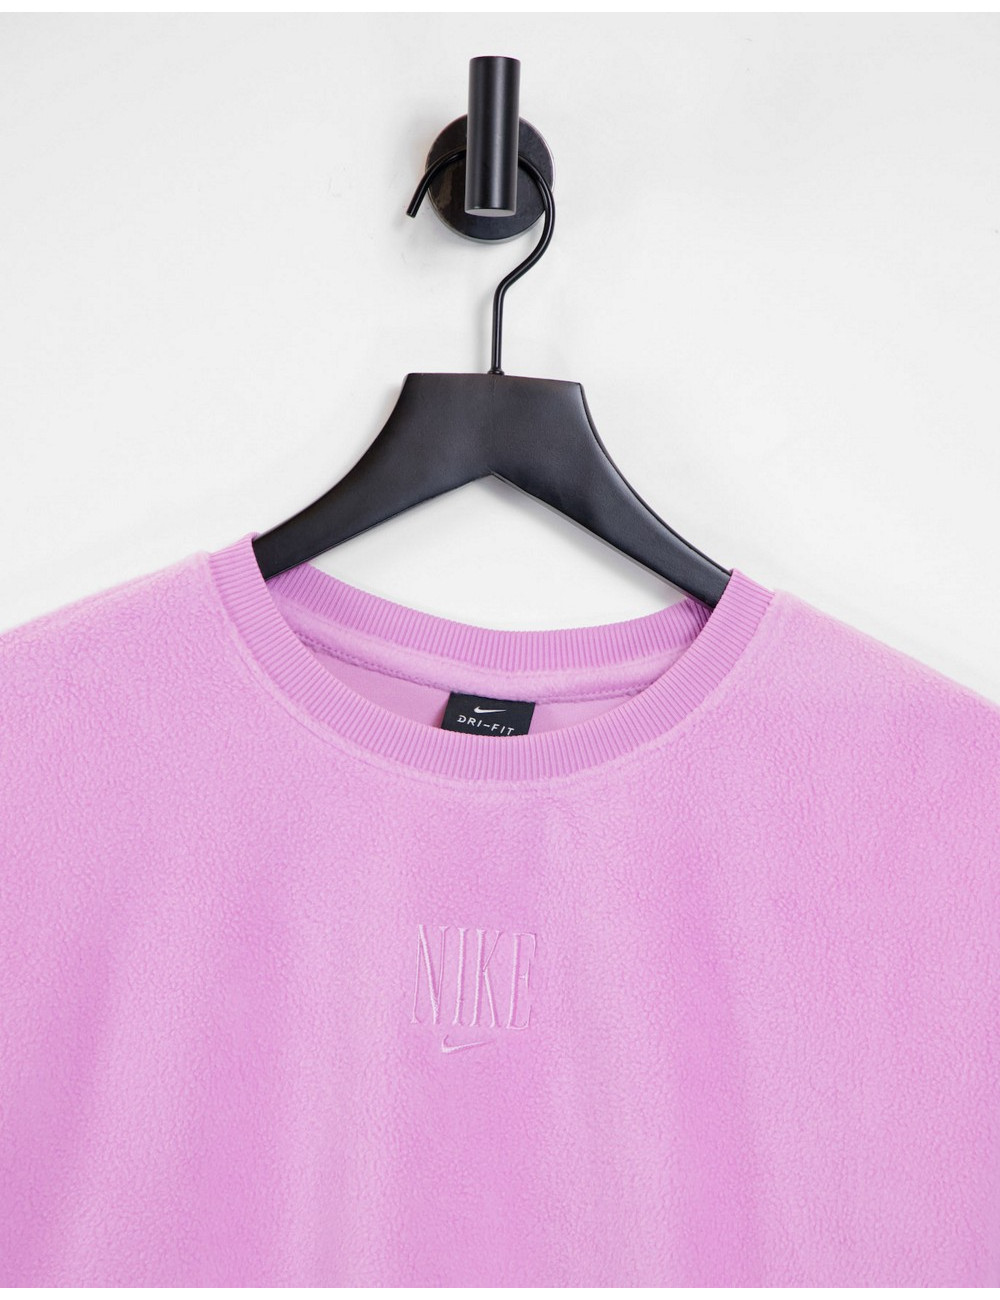 Nike Therma sweatshirt in pink